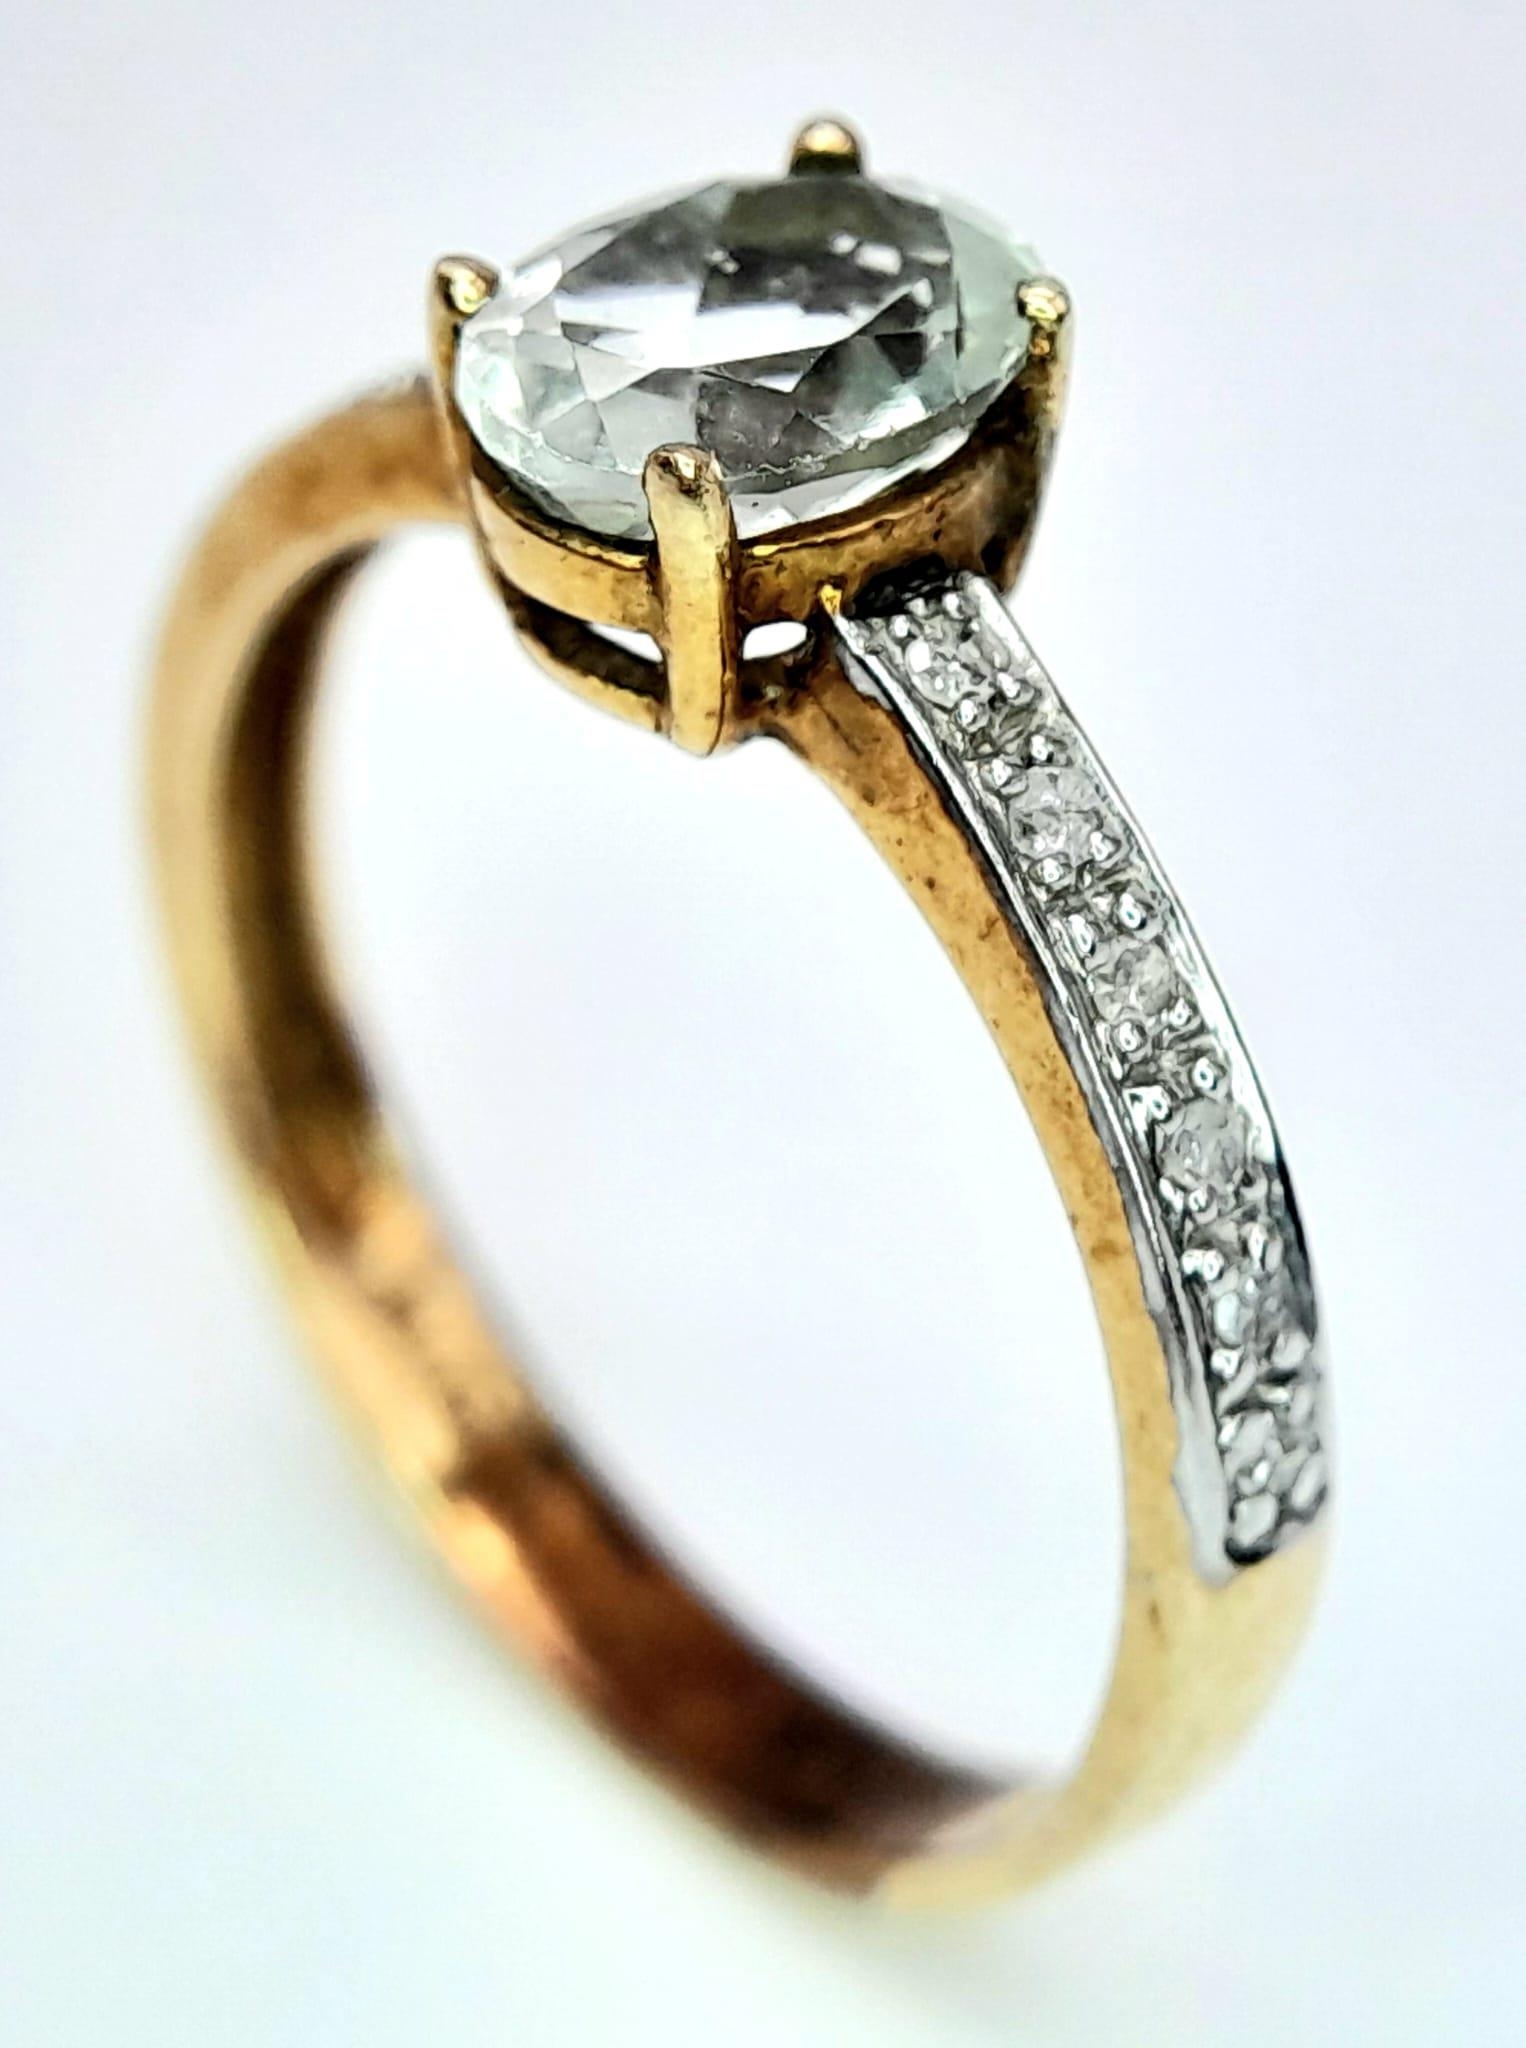 A 9K YELLOW GOLD DIAMOND & AQUAMARINE SET RING. OVAL AQUAMARINE GEMSTONE APPROX 0.75CT. 1.8G. SIZE N - Image 3 of 6